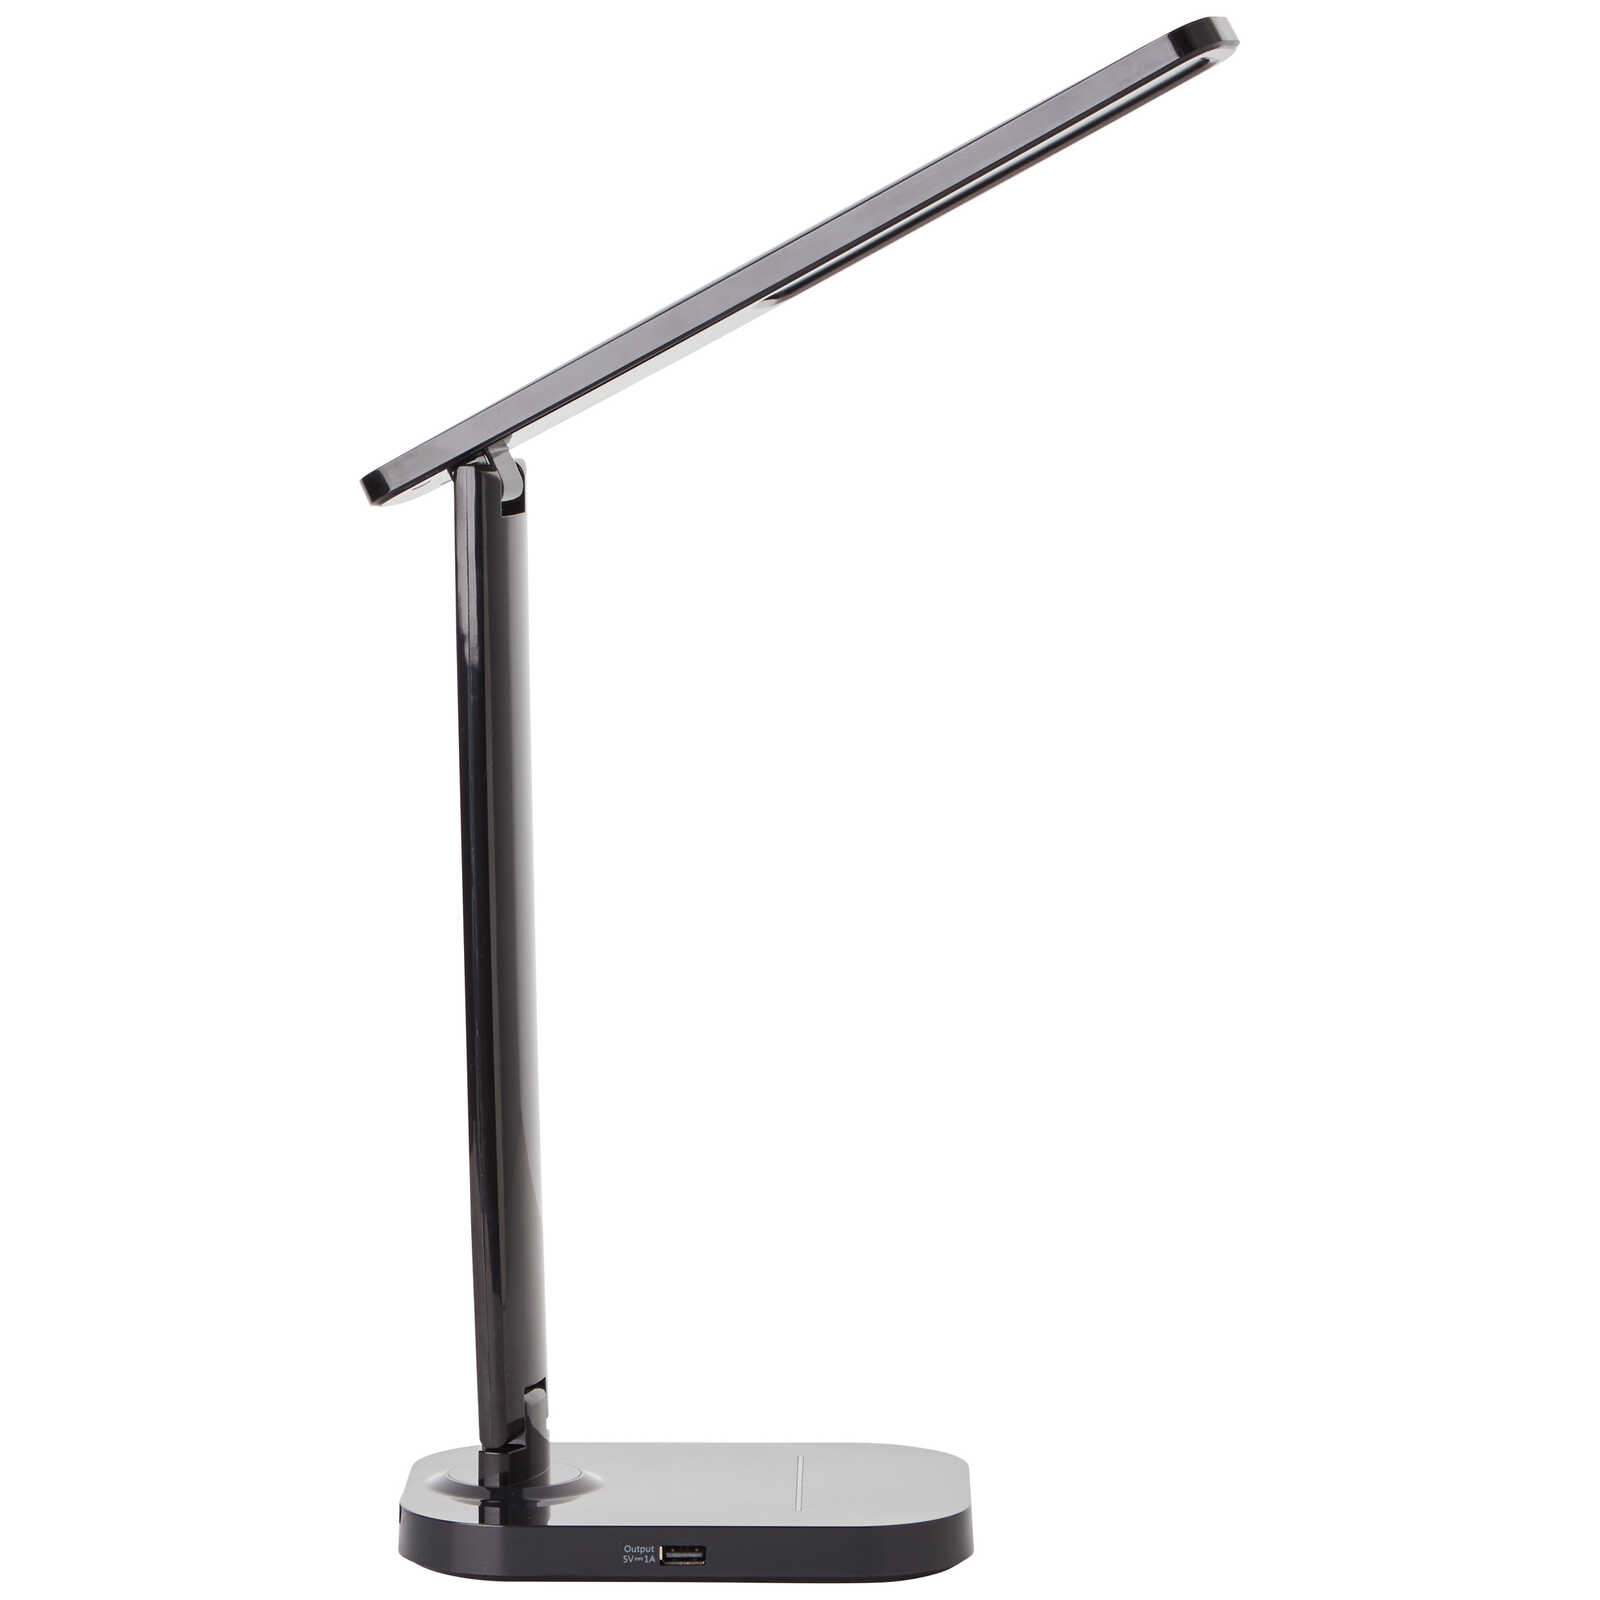             Plastic table lamp - Tabea 2 - Black
        